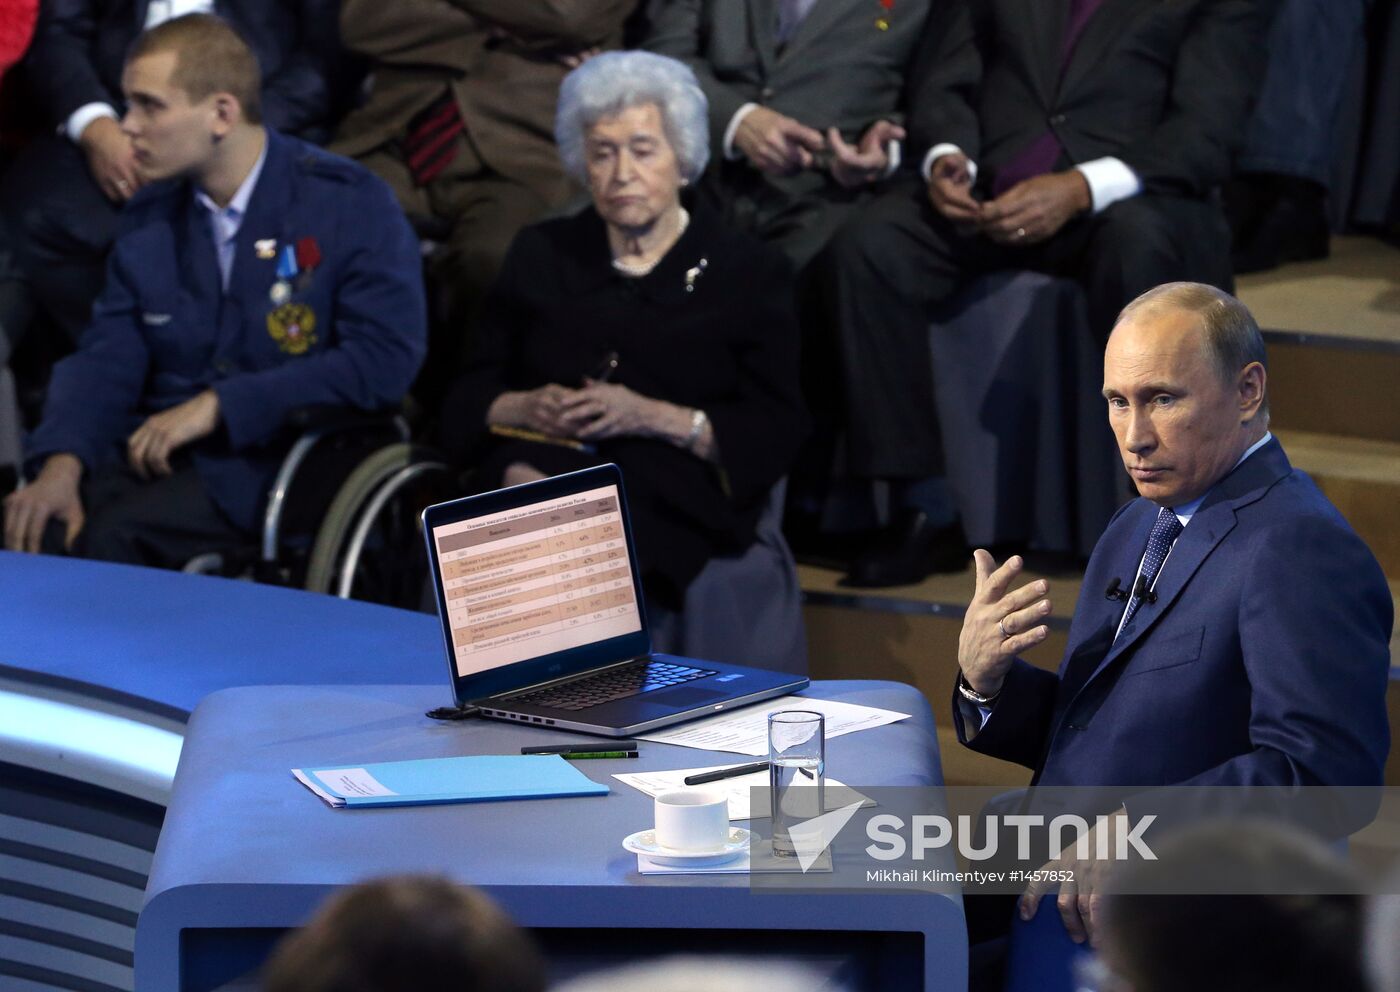 Live Q&A session with Vladimir Putin